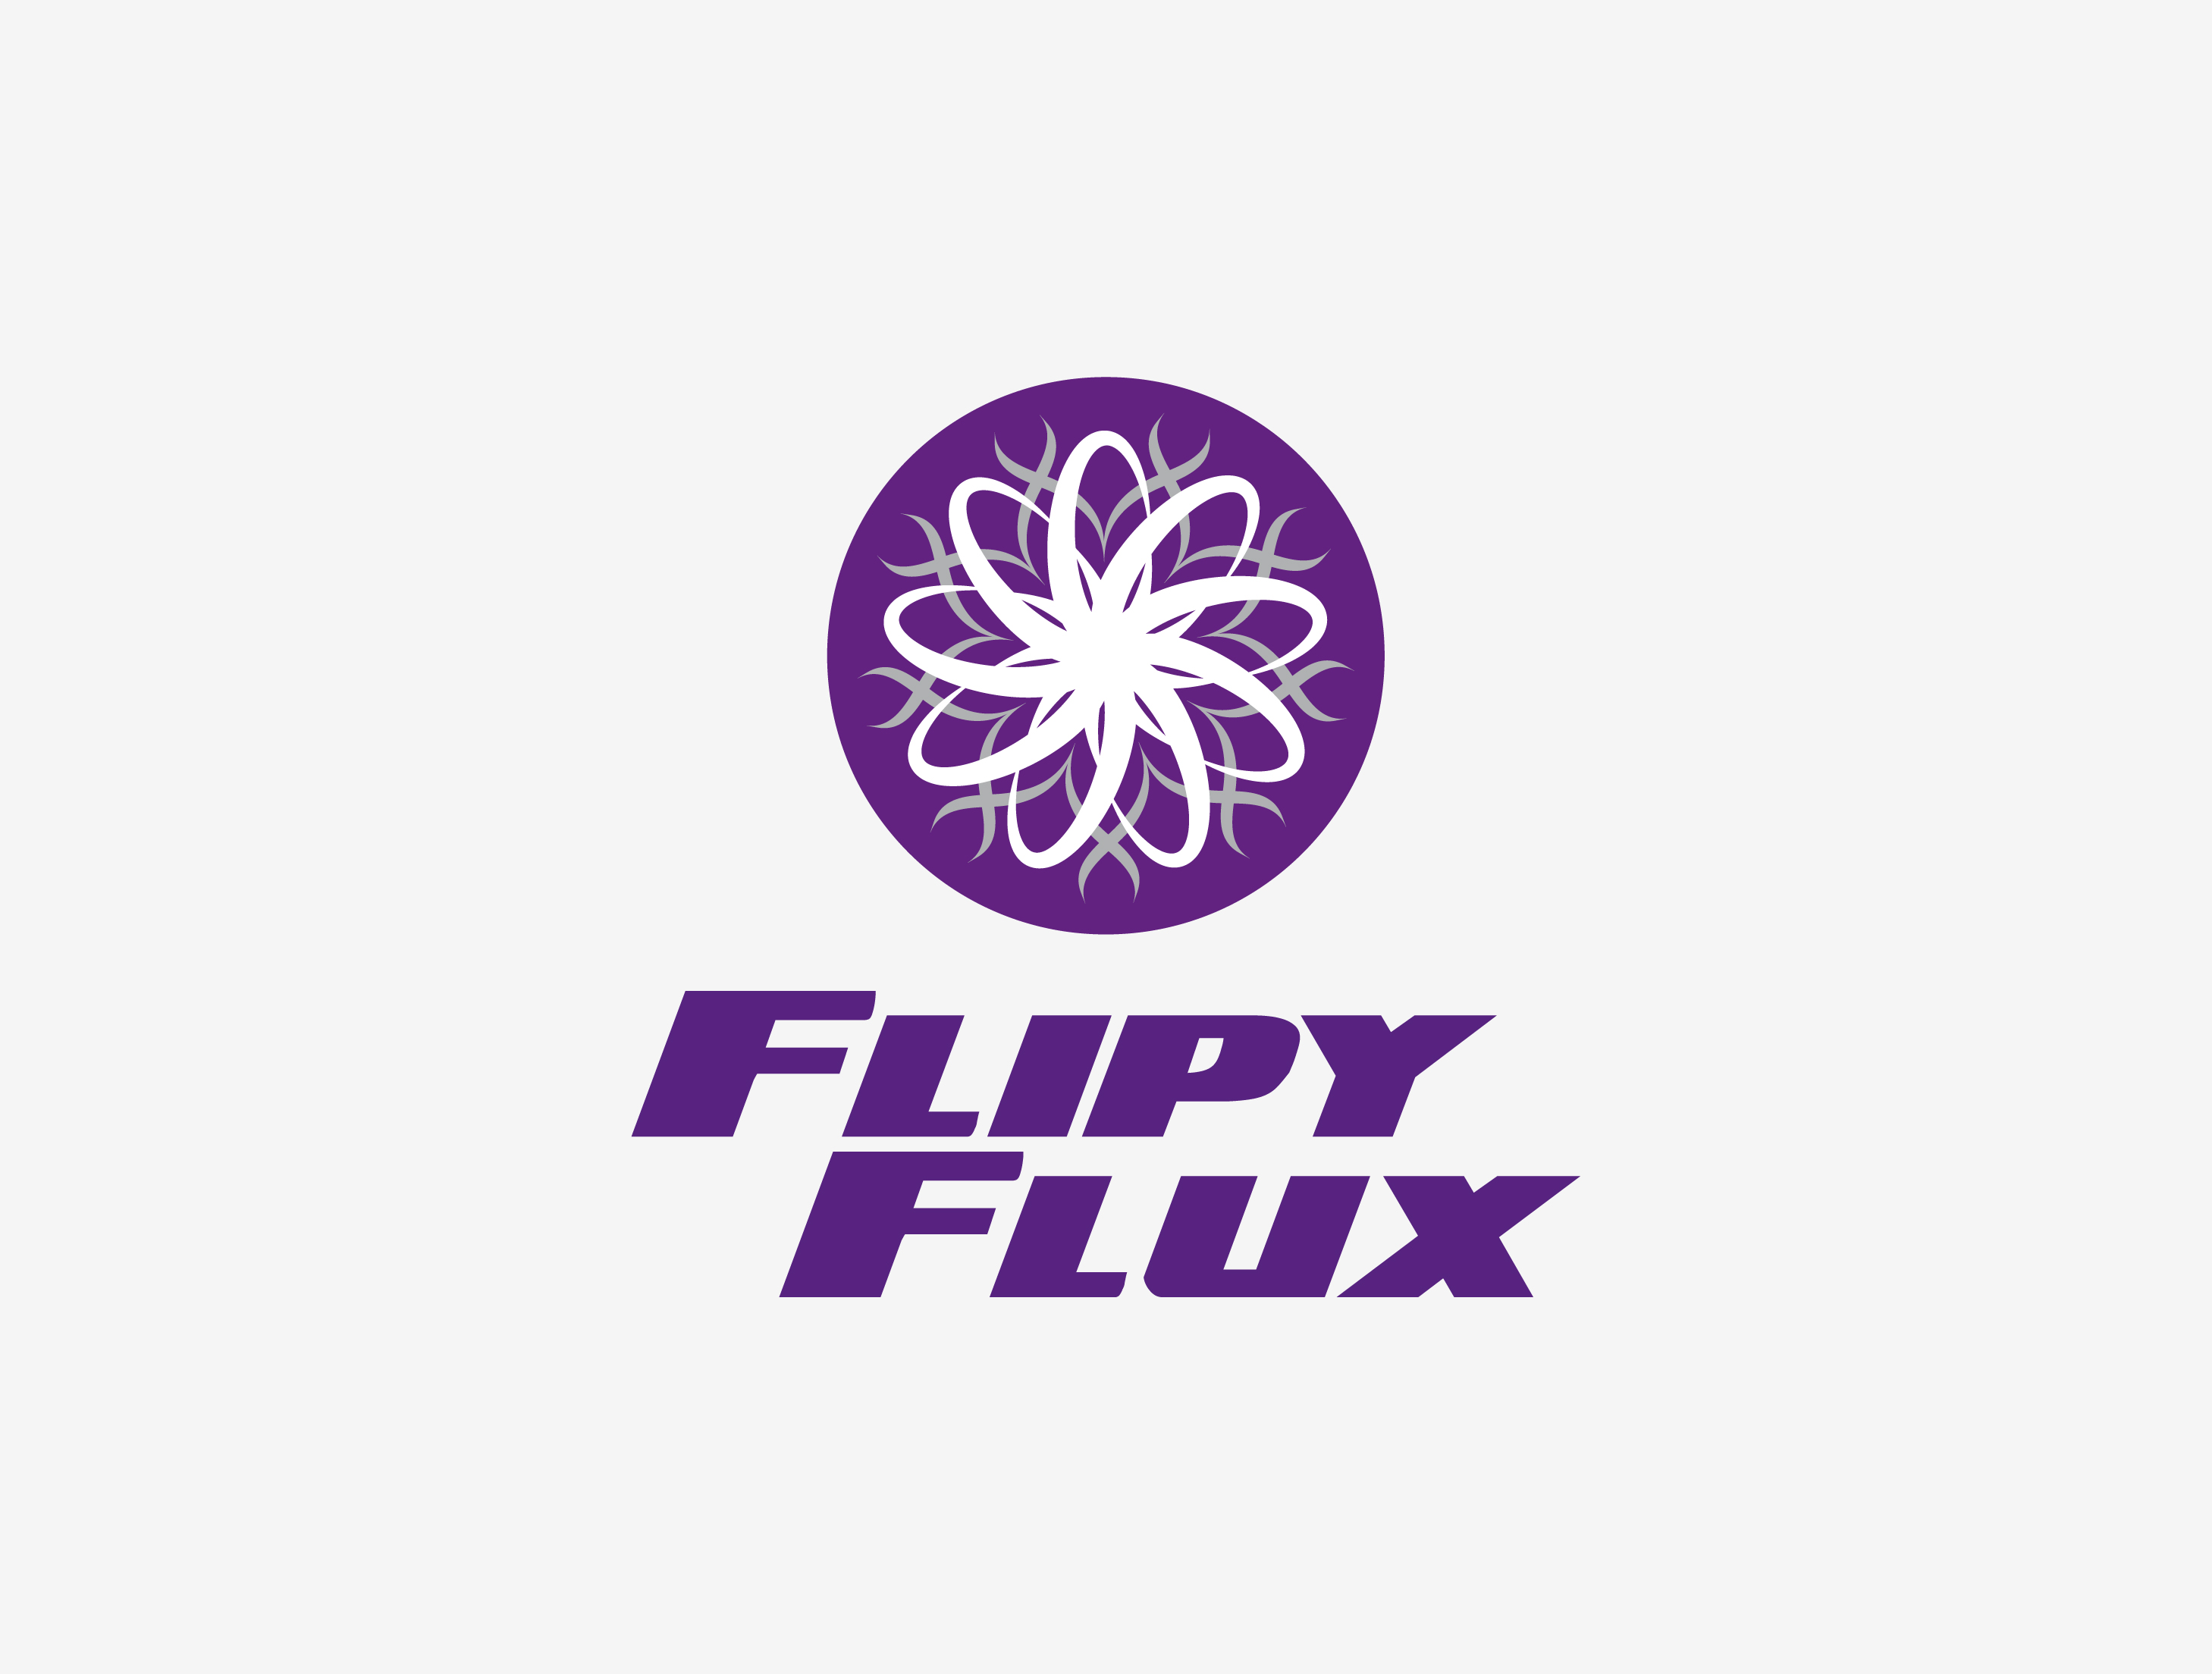 FlipyFlux-logo-identidad corporativa-01